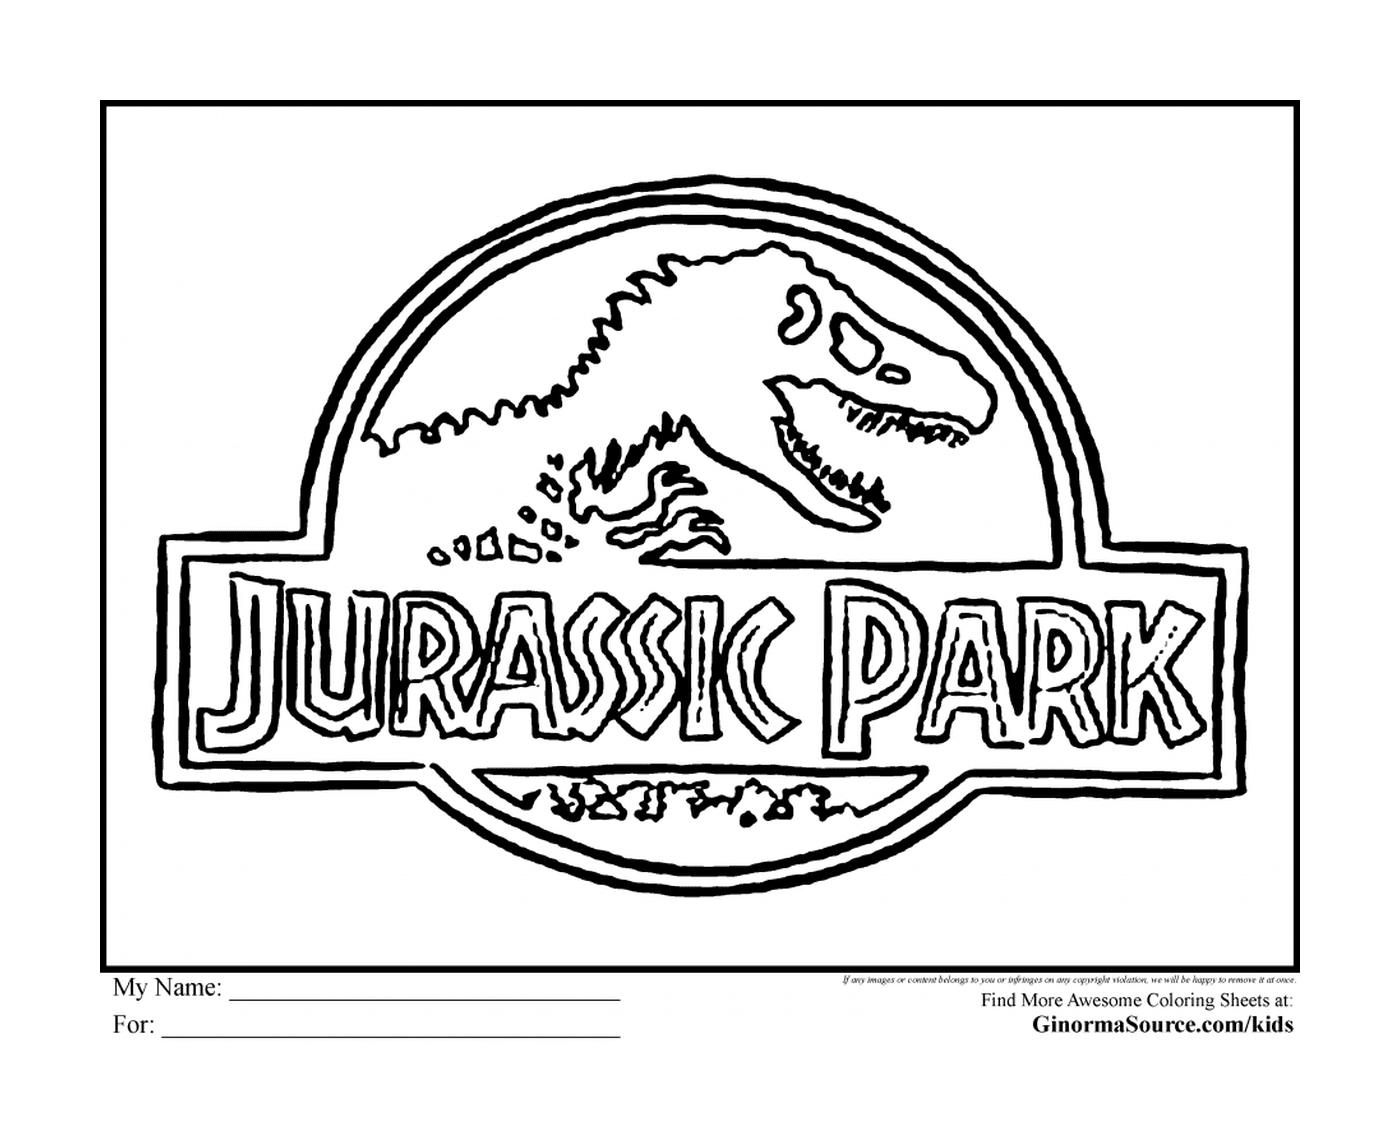  Logotipo do Jurassic Park, símbolo da aventura 